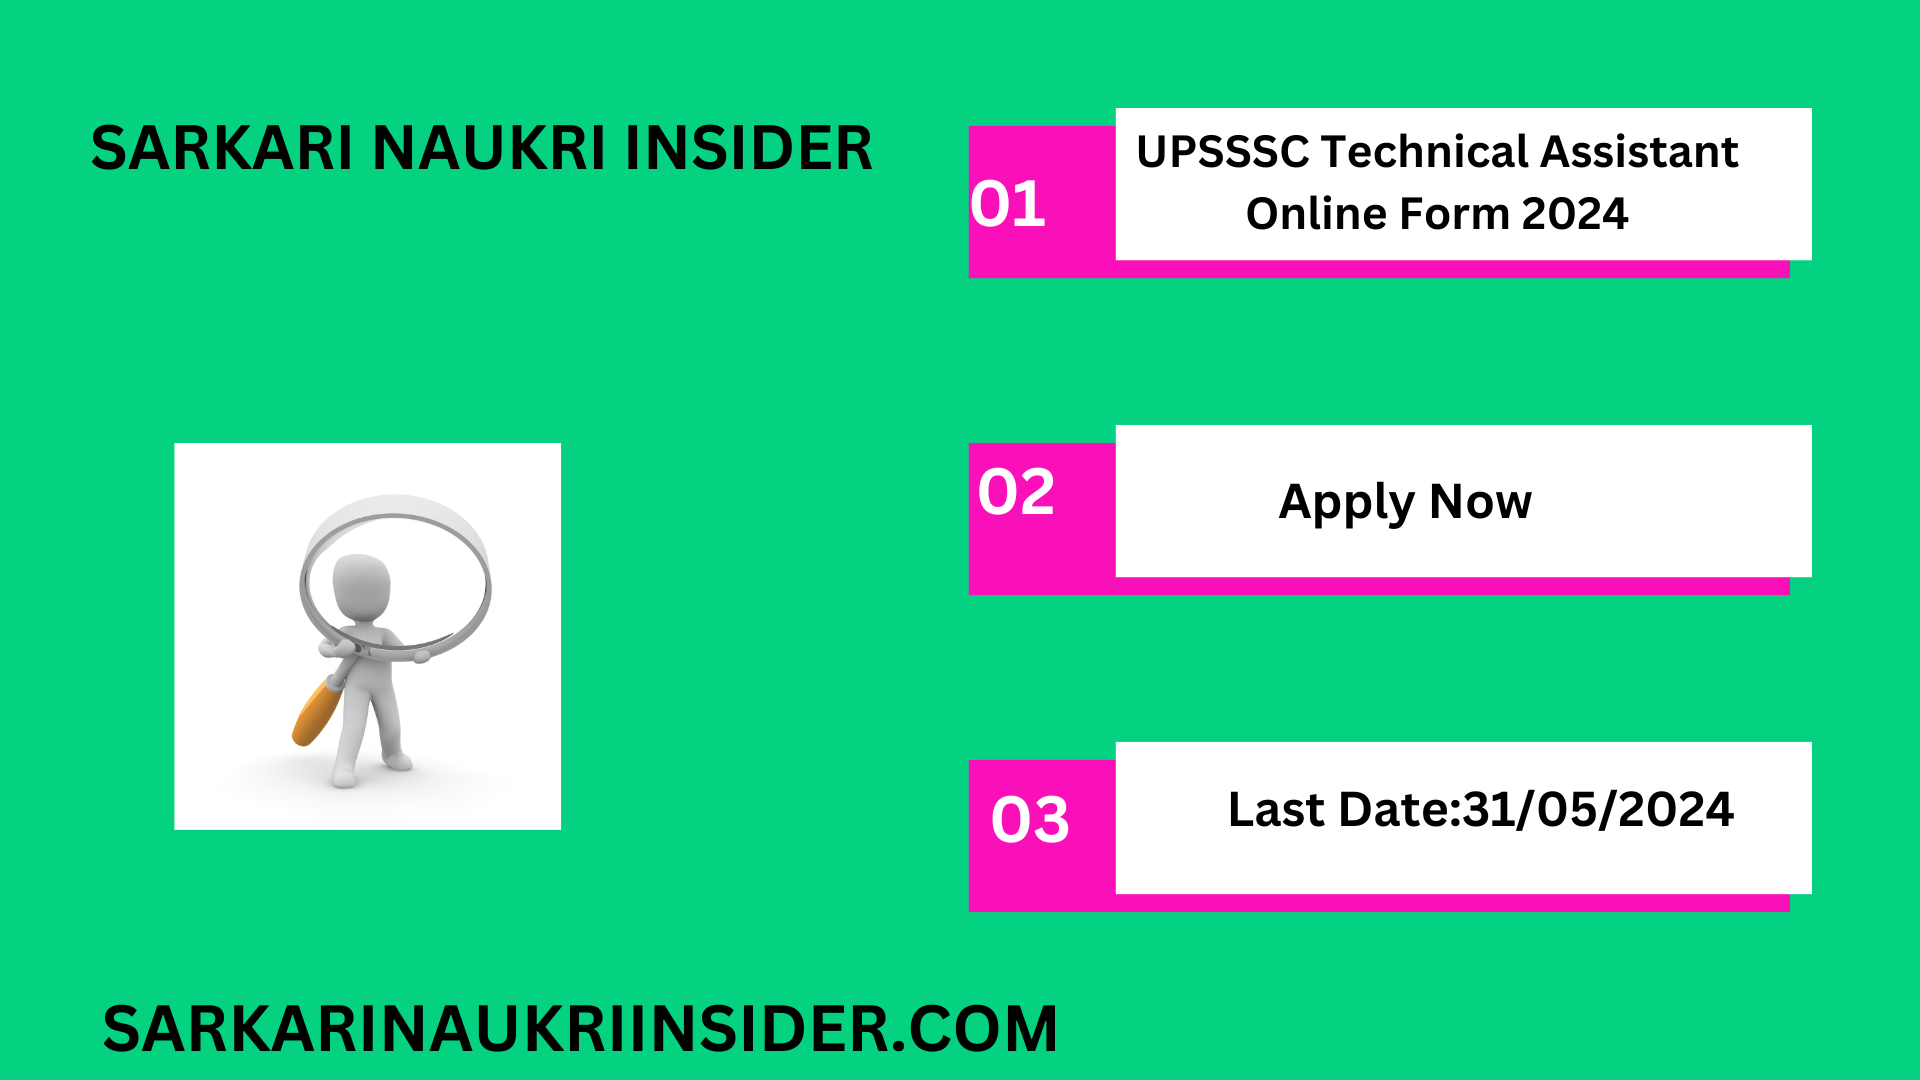 UPSSSC Technical Assistant Online Form 2024